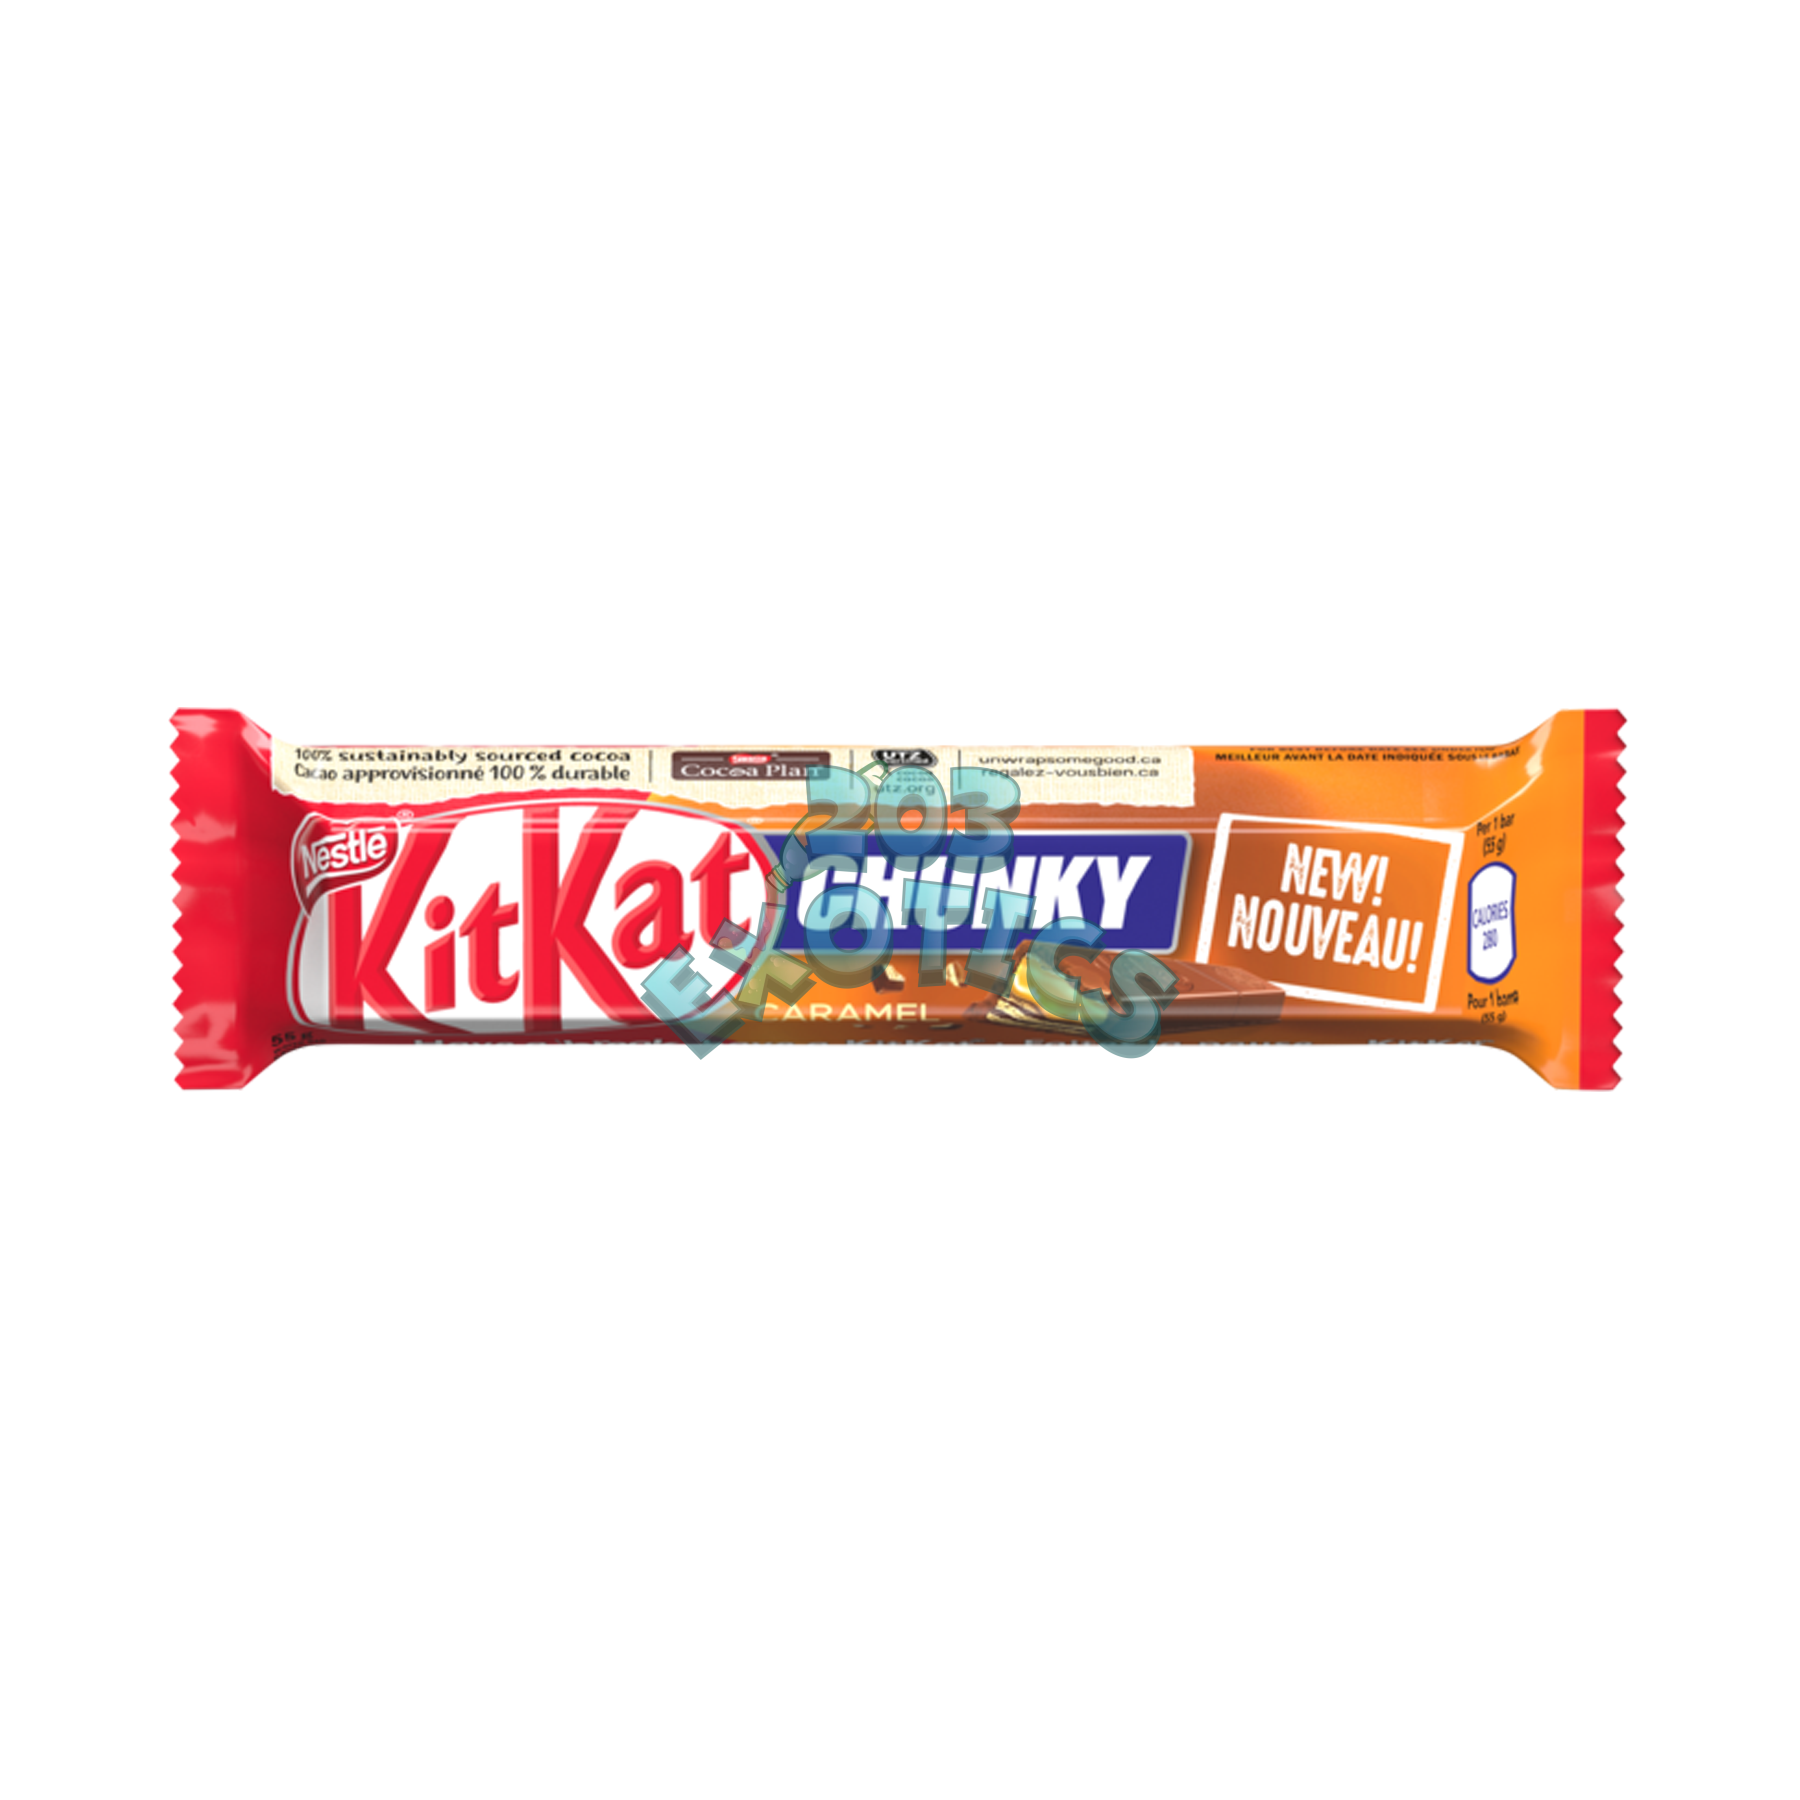 Kit Kat Chunky Caramel Wafer Bar